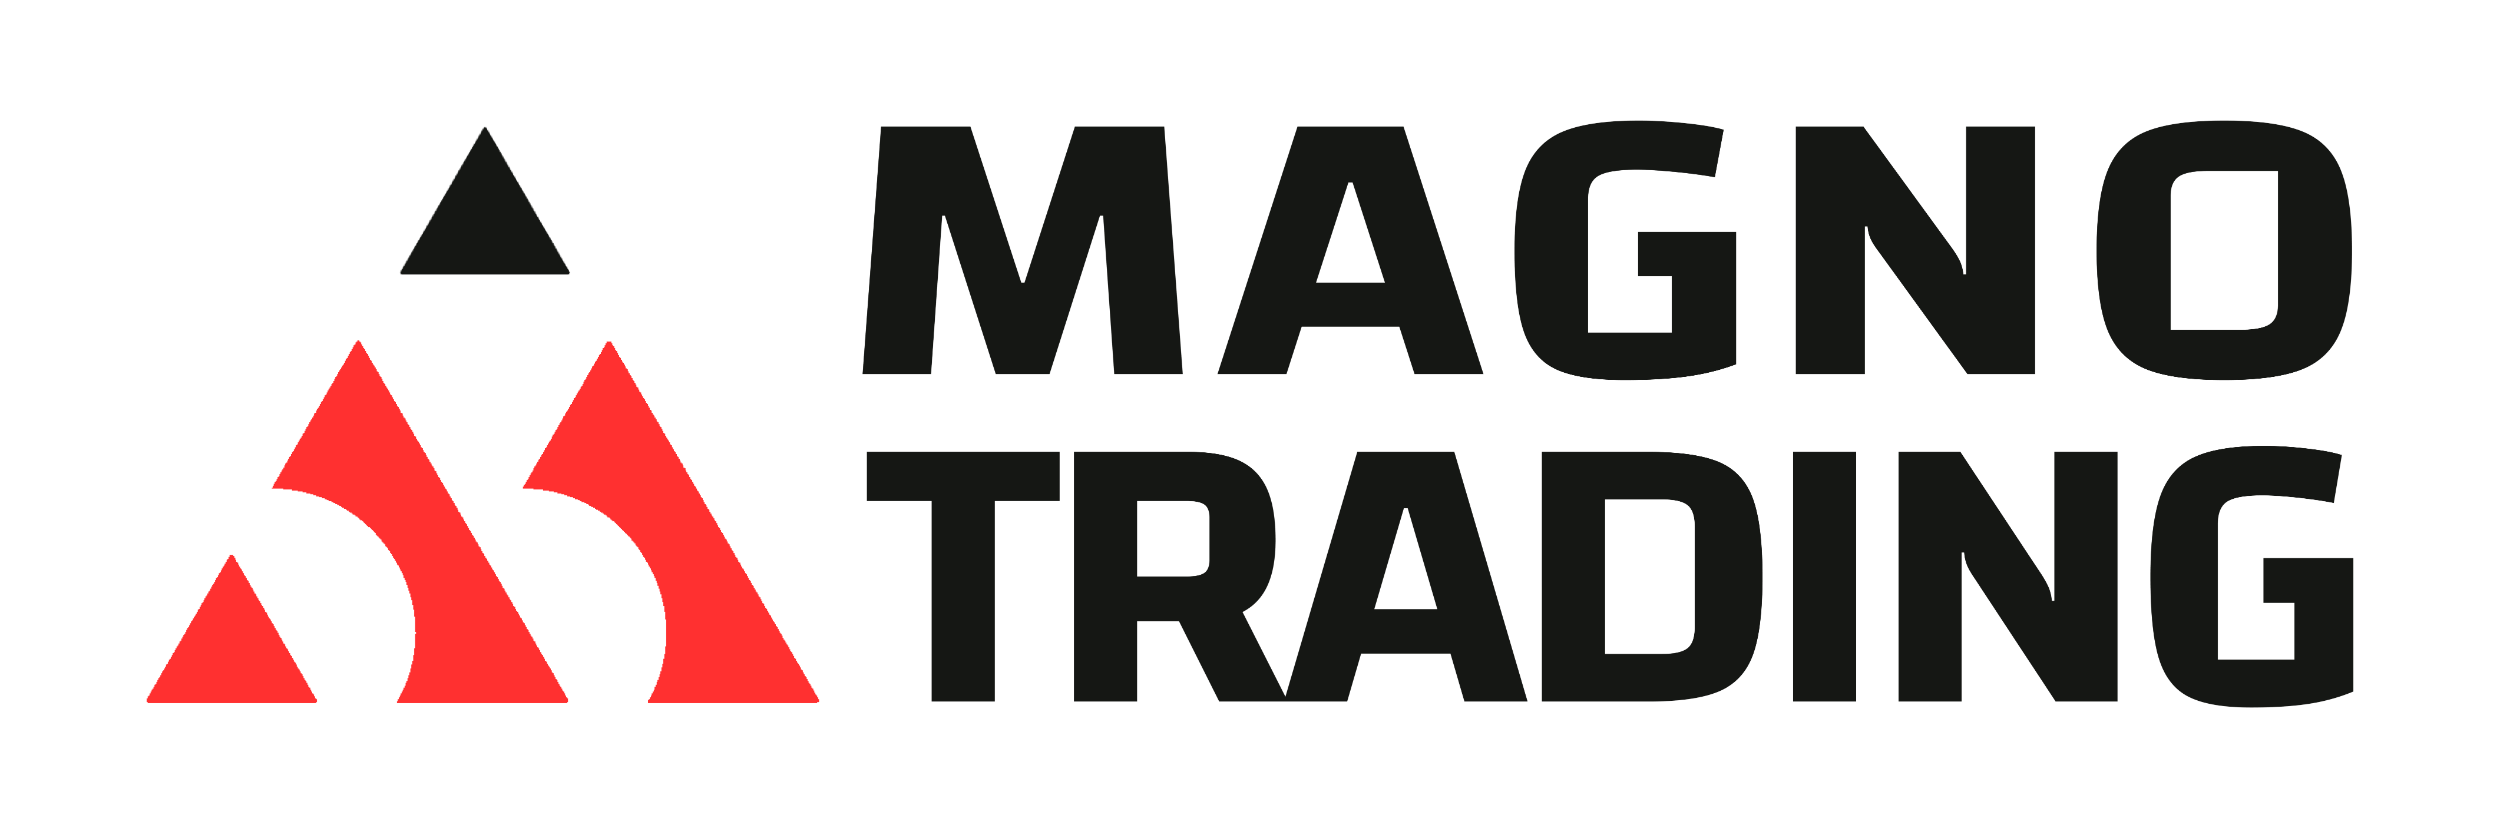 Magno Trading, Logo,